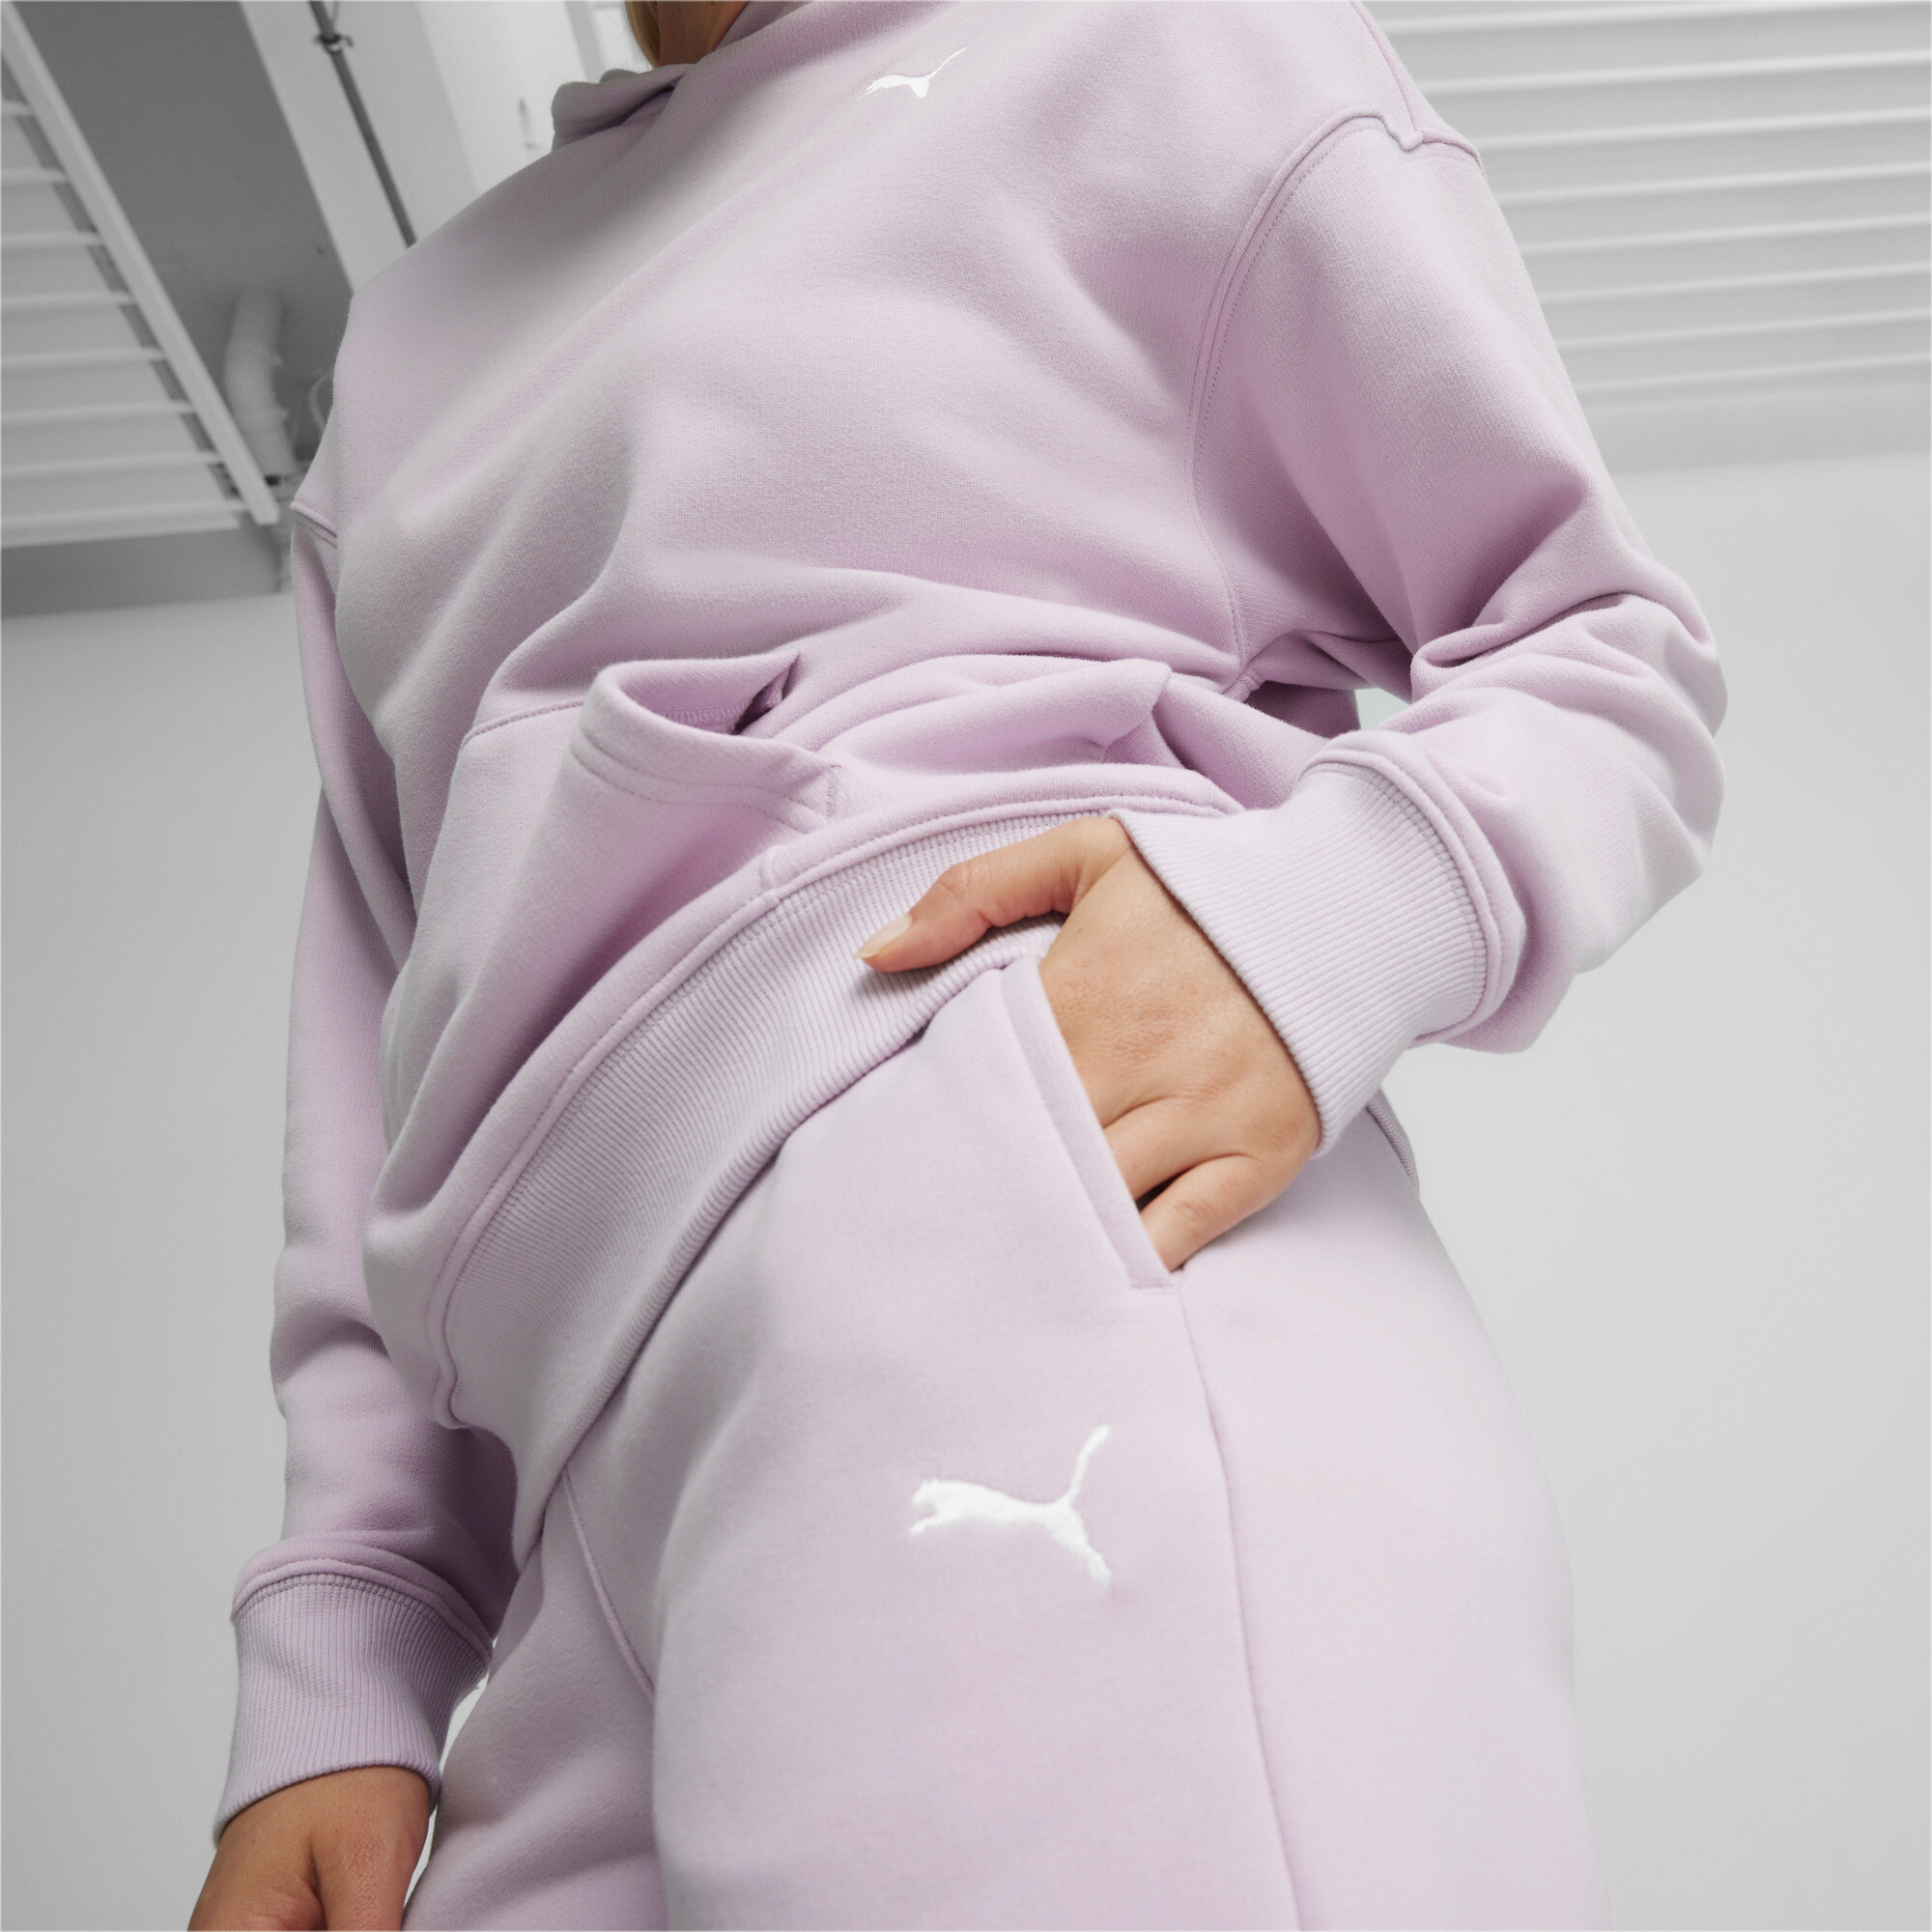 Women's Puma Loungewear's Track Suit, Purple, Size XL, Clothing